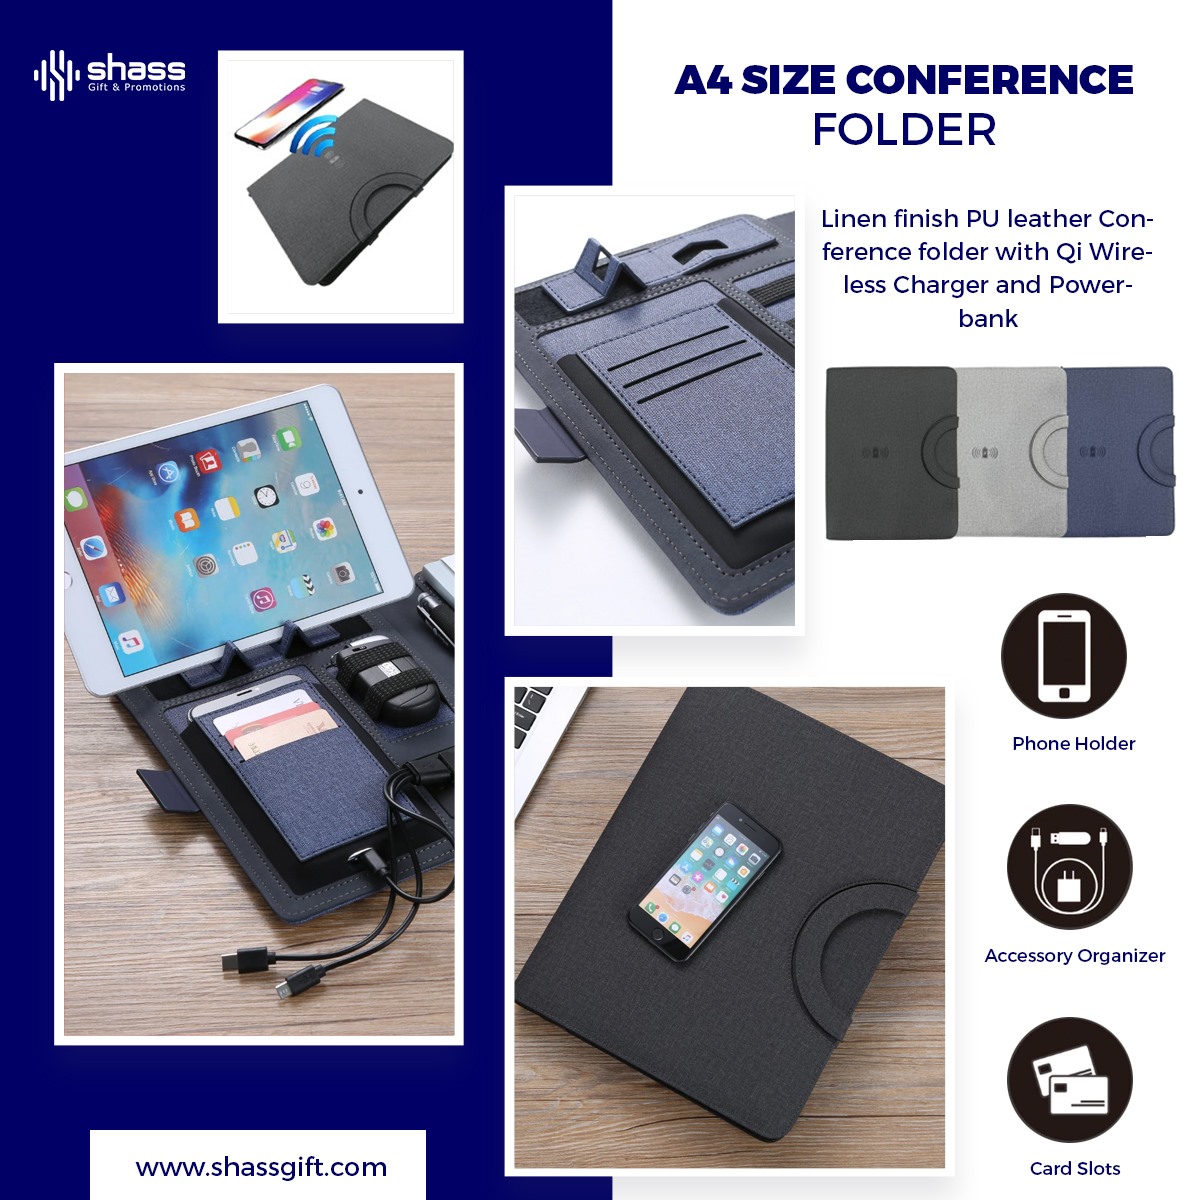 P U Leather Conference Folder